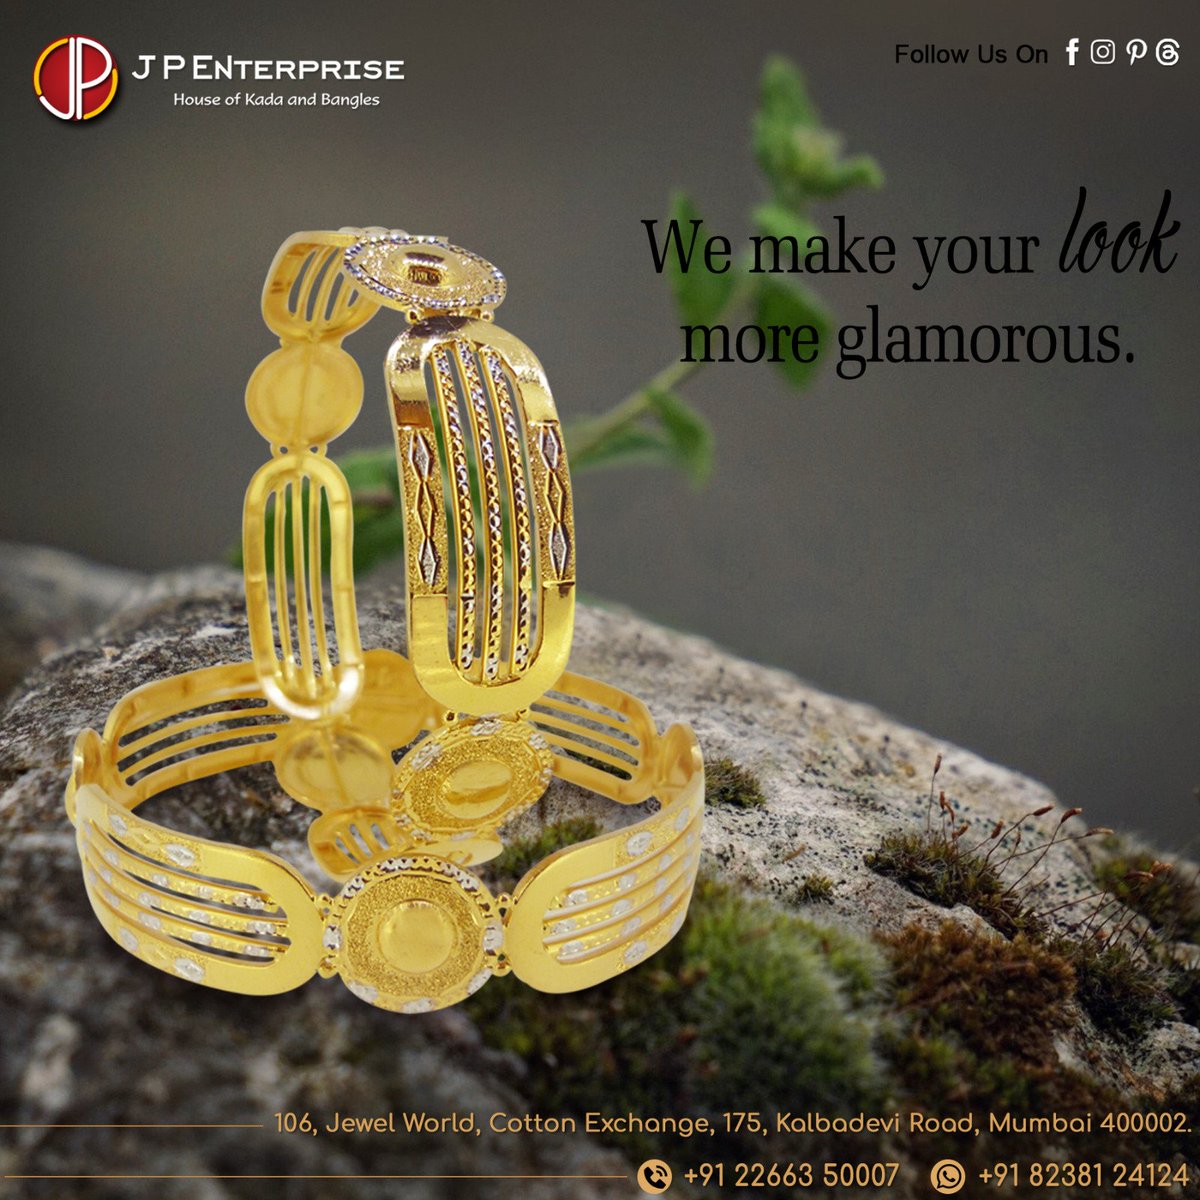 We make your look more glamorous.

#goldkada #beautifuljewellery #royaljewellery #goldkangan #goldjewellery #bangles #goldbangles #craftsmanship #classicjewellery #antiquebangles #goldjewellerydesign #goldbanglesdesigns #mumbaijewellers #indianjewellery #indianjeweller